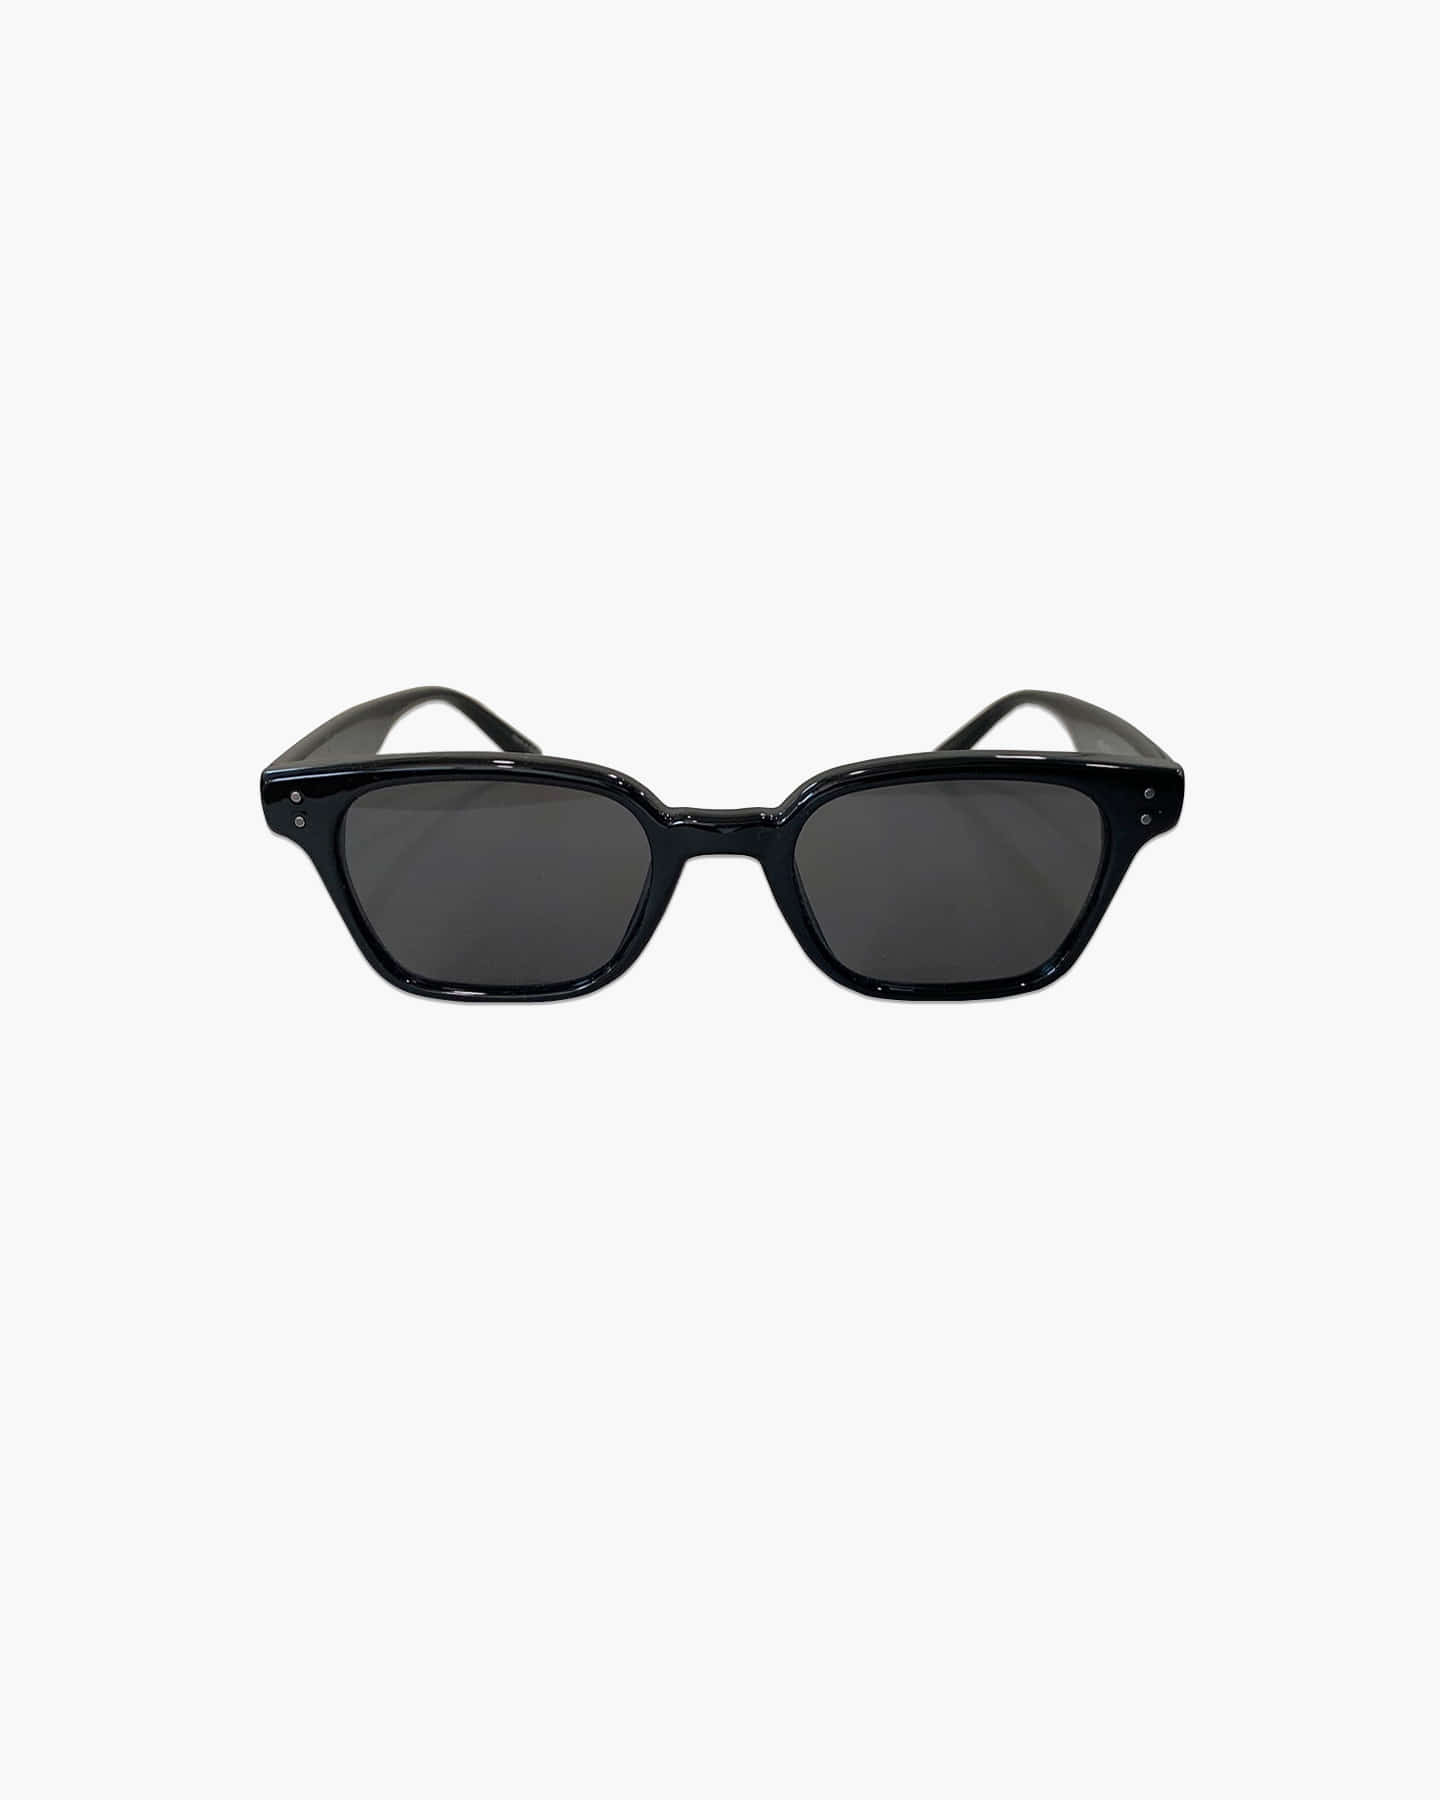 Ry plain square shape sunglasses